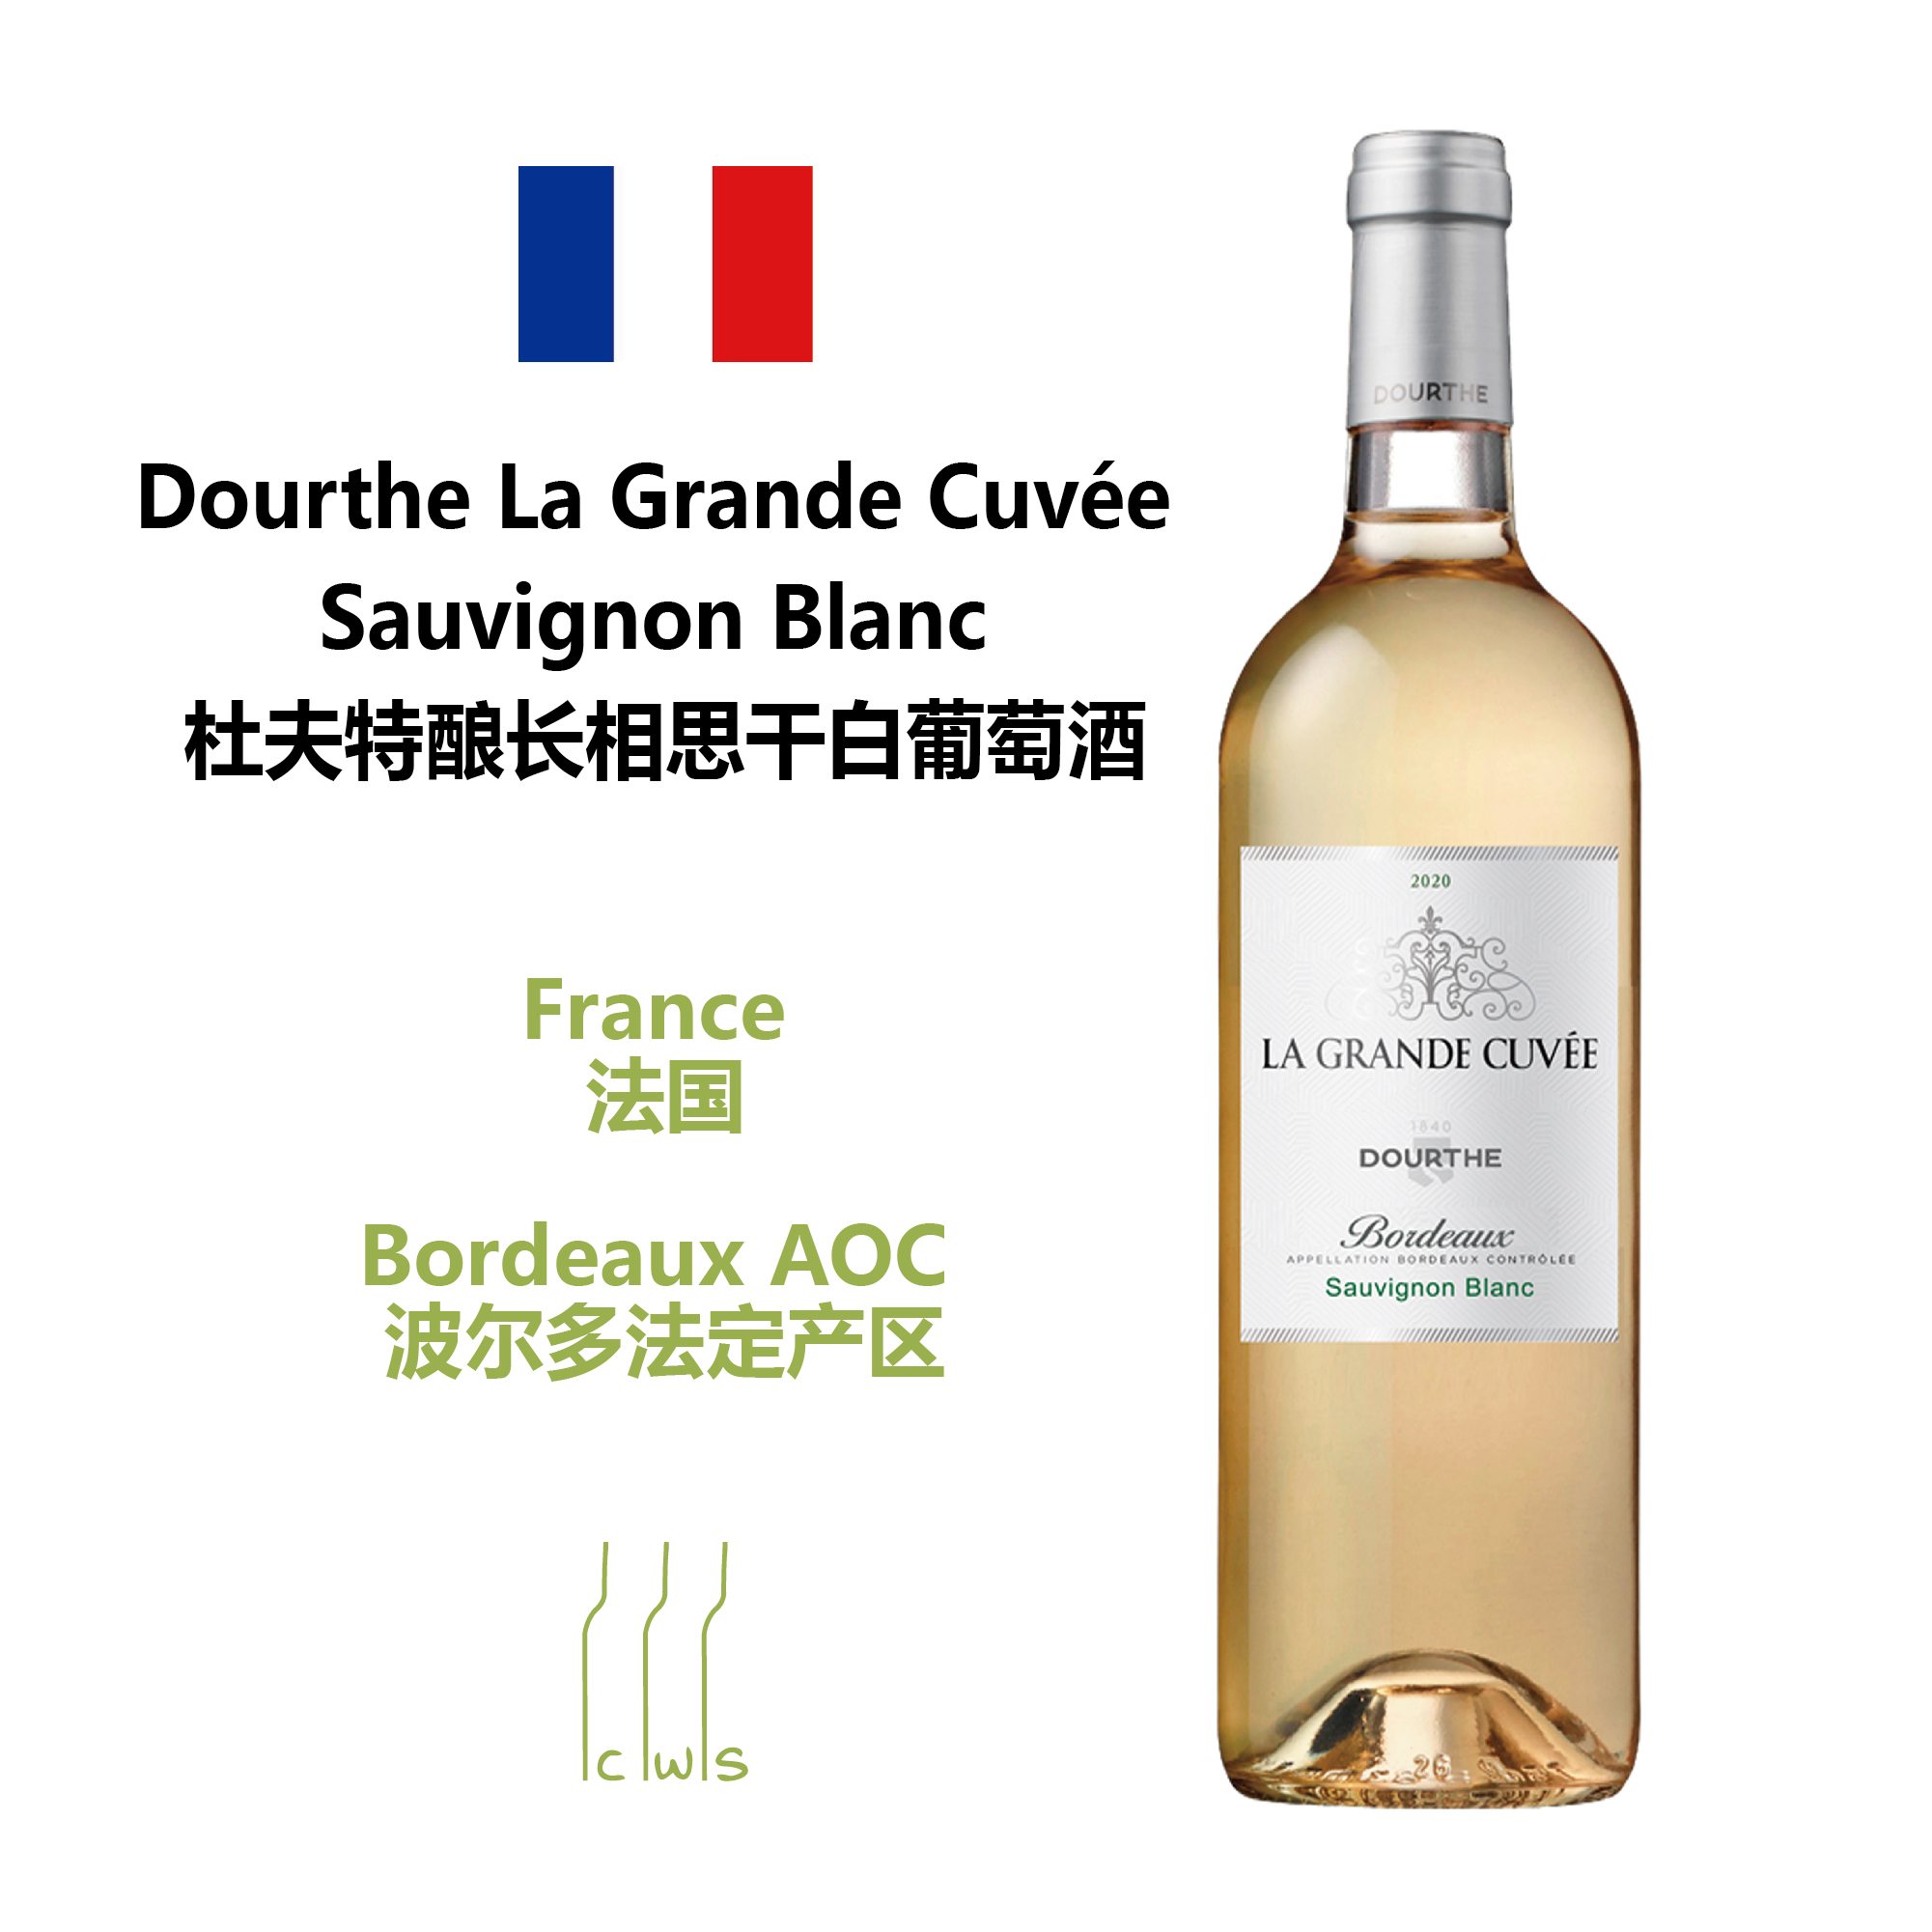 Dourthe La Grande Cuvee Sauvignon Blanc 杜夫特酿长相思干白葡萄酒